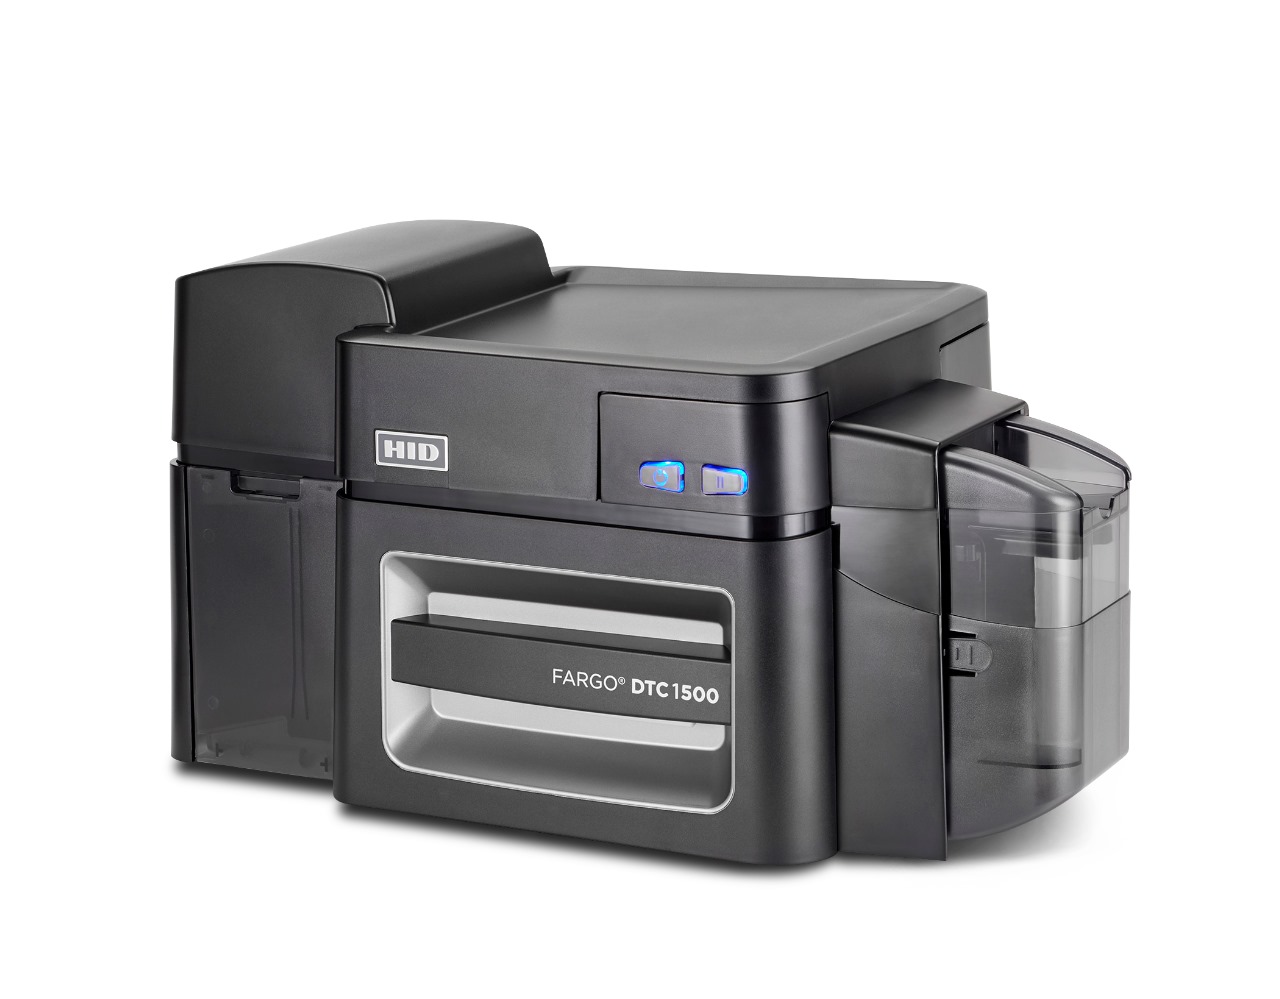 The HID Fargo DTC1500 printer